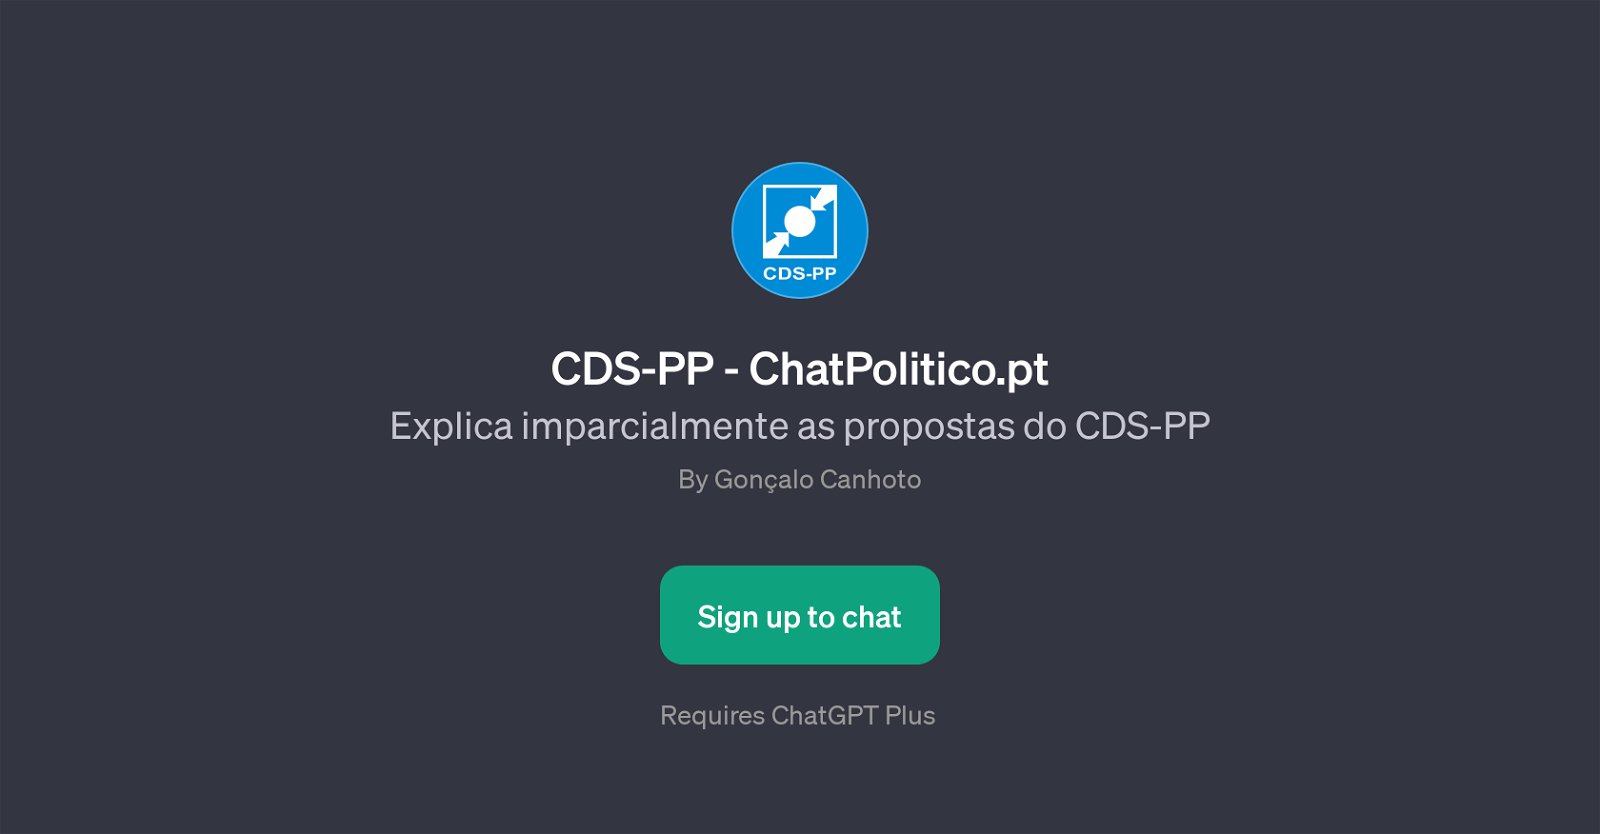 CDS-PP - ChatPolitico.pt website